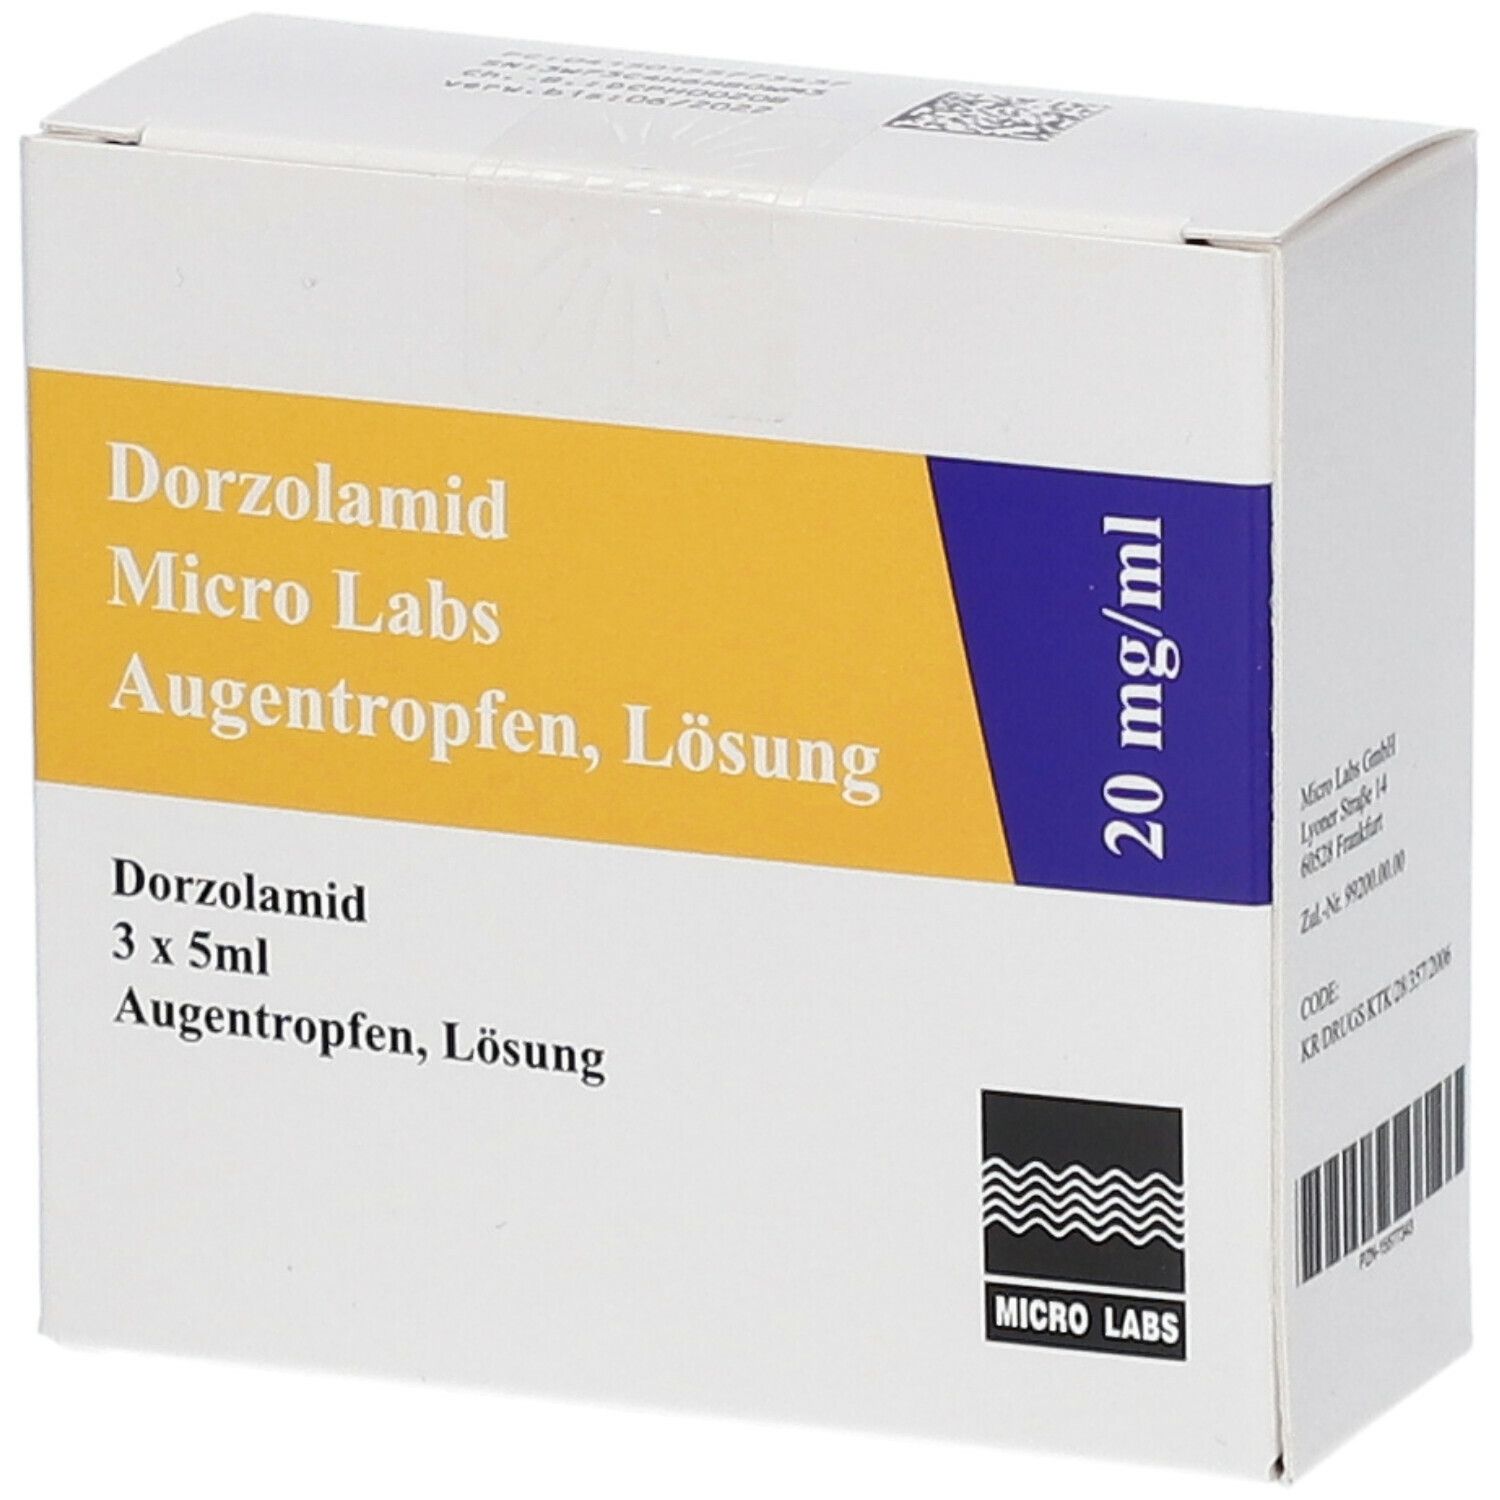 Dorzolamid Micro Labs 20 mg/ml